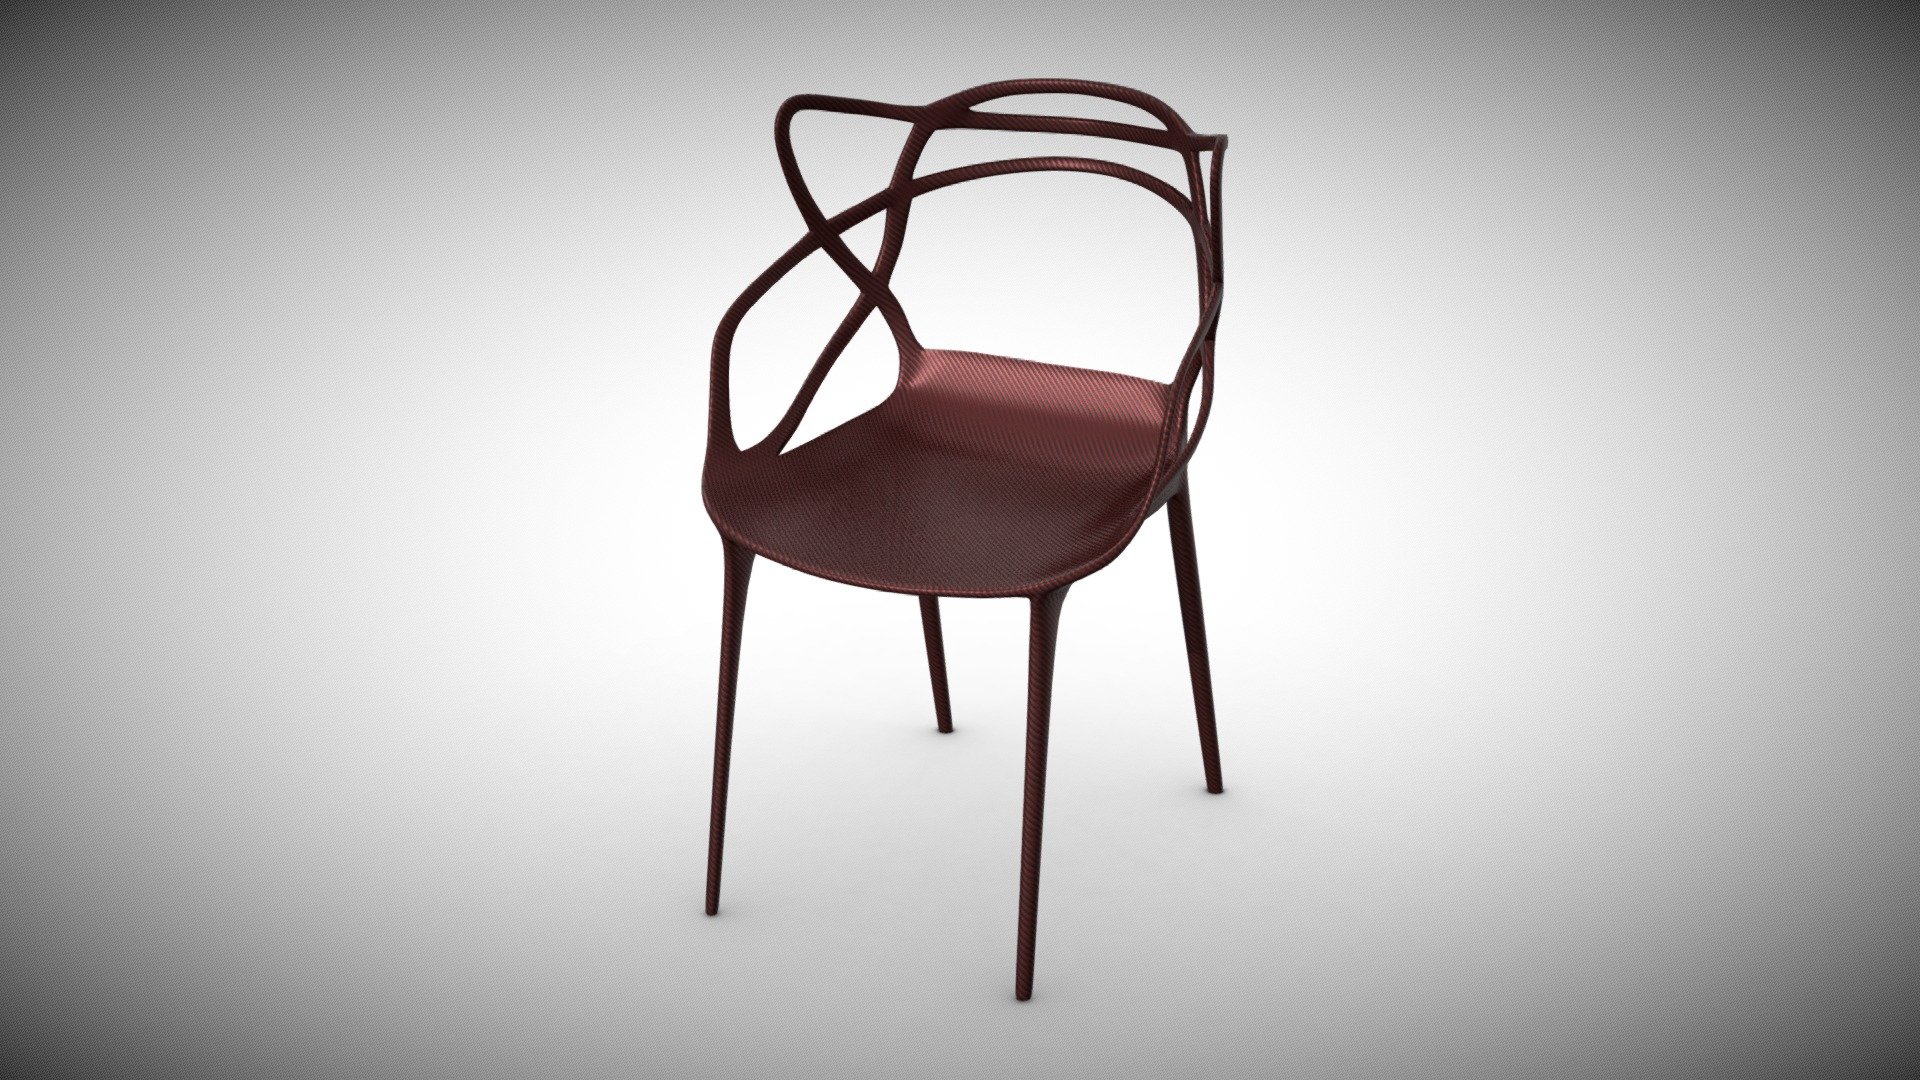 High poly model of a designer chair made up of carbon fiber 3d model